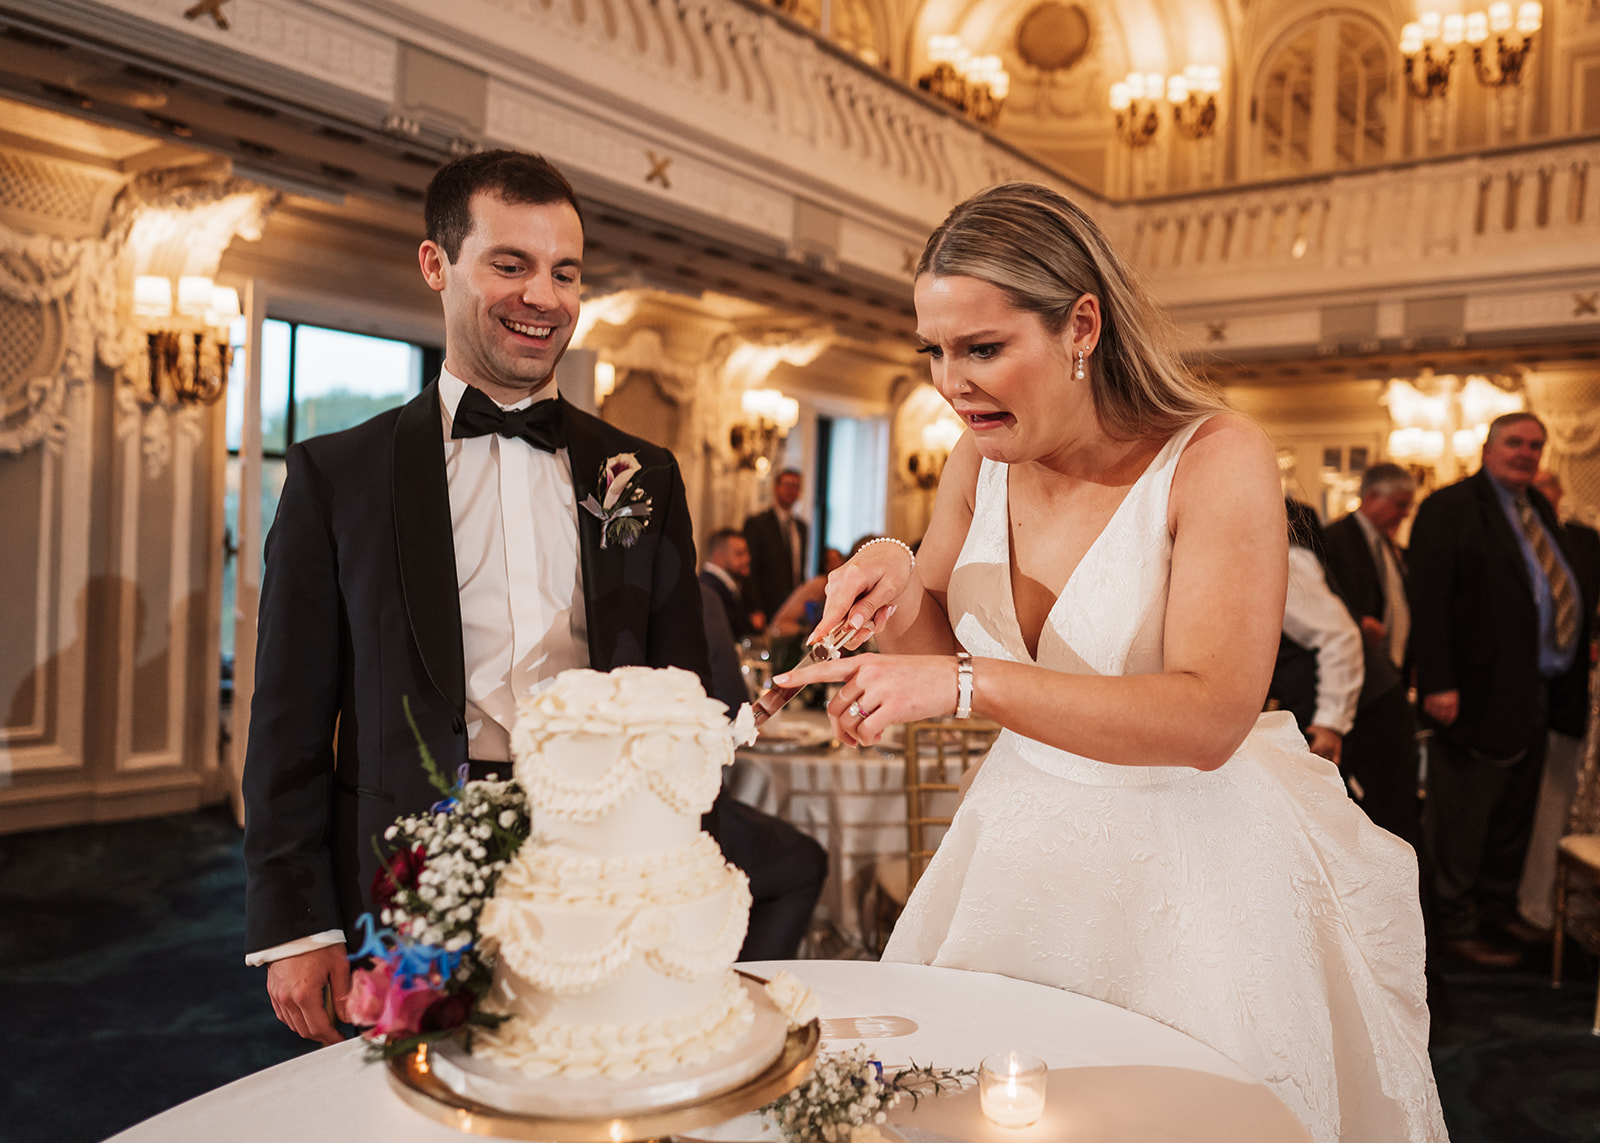 The Blackstone hotel in chicago wedding photos - reception  cake cuting